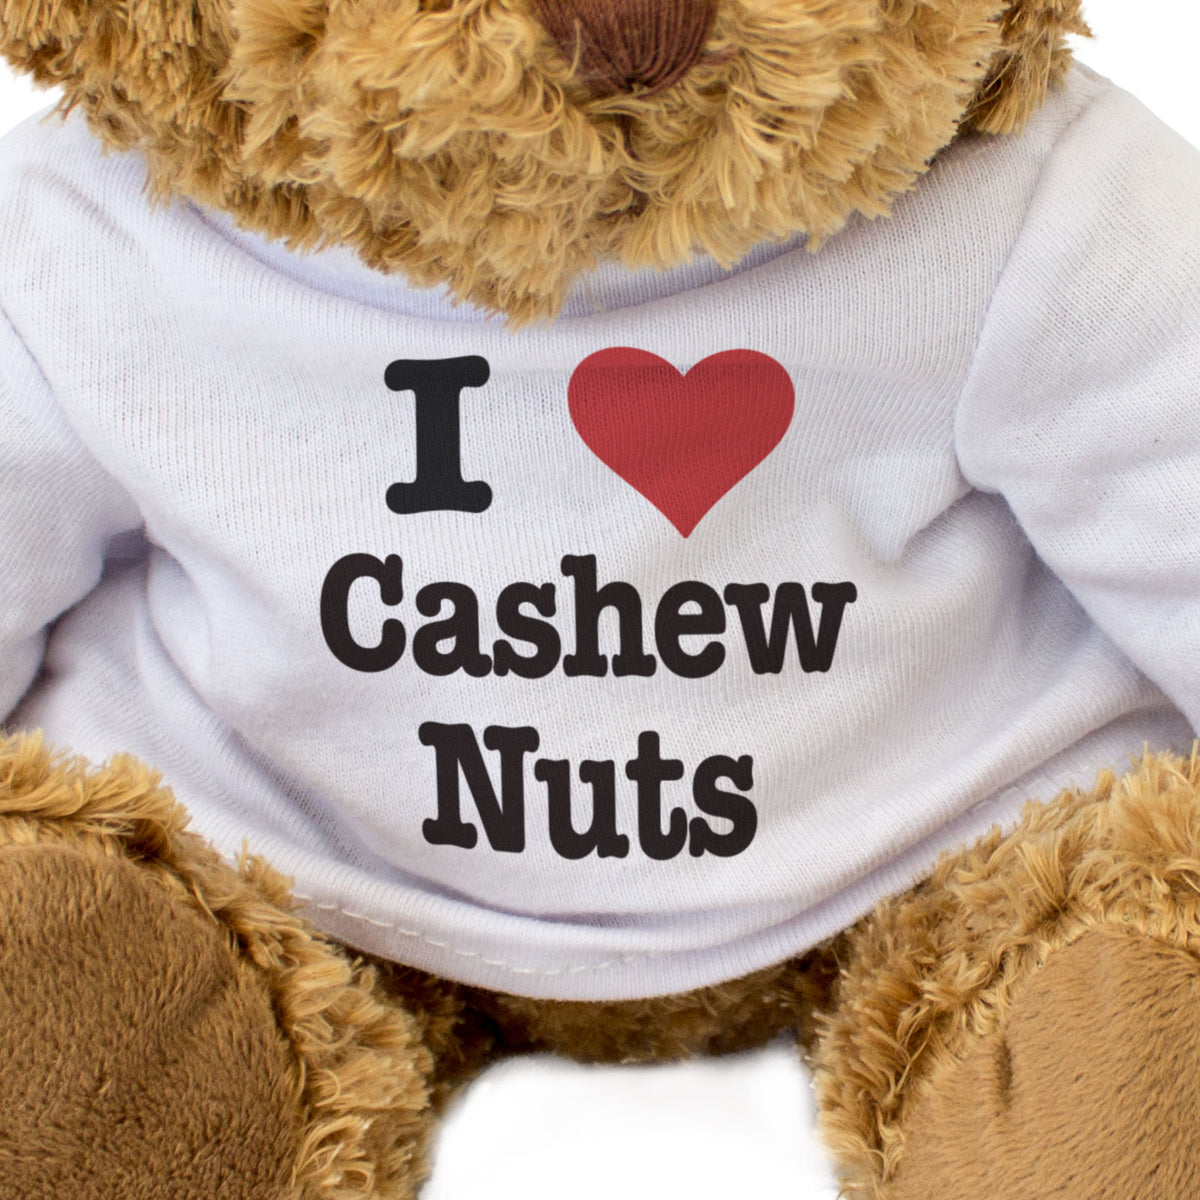 I Love Cashew Nuts - Teddy Bear